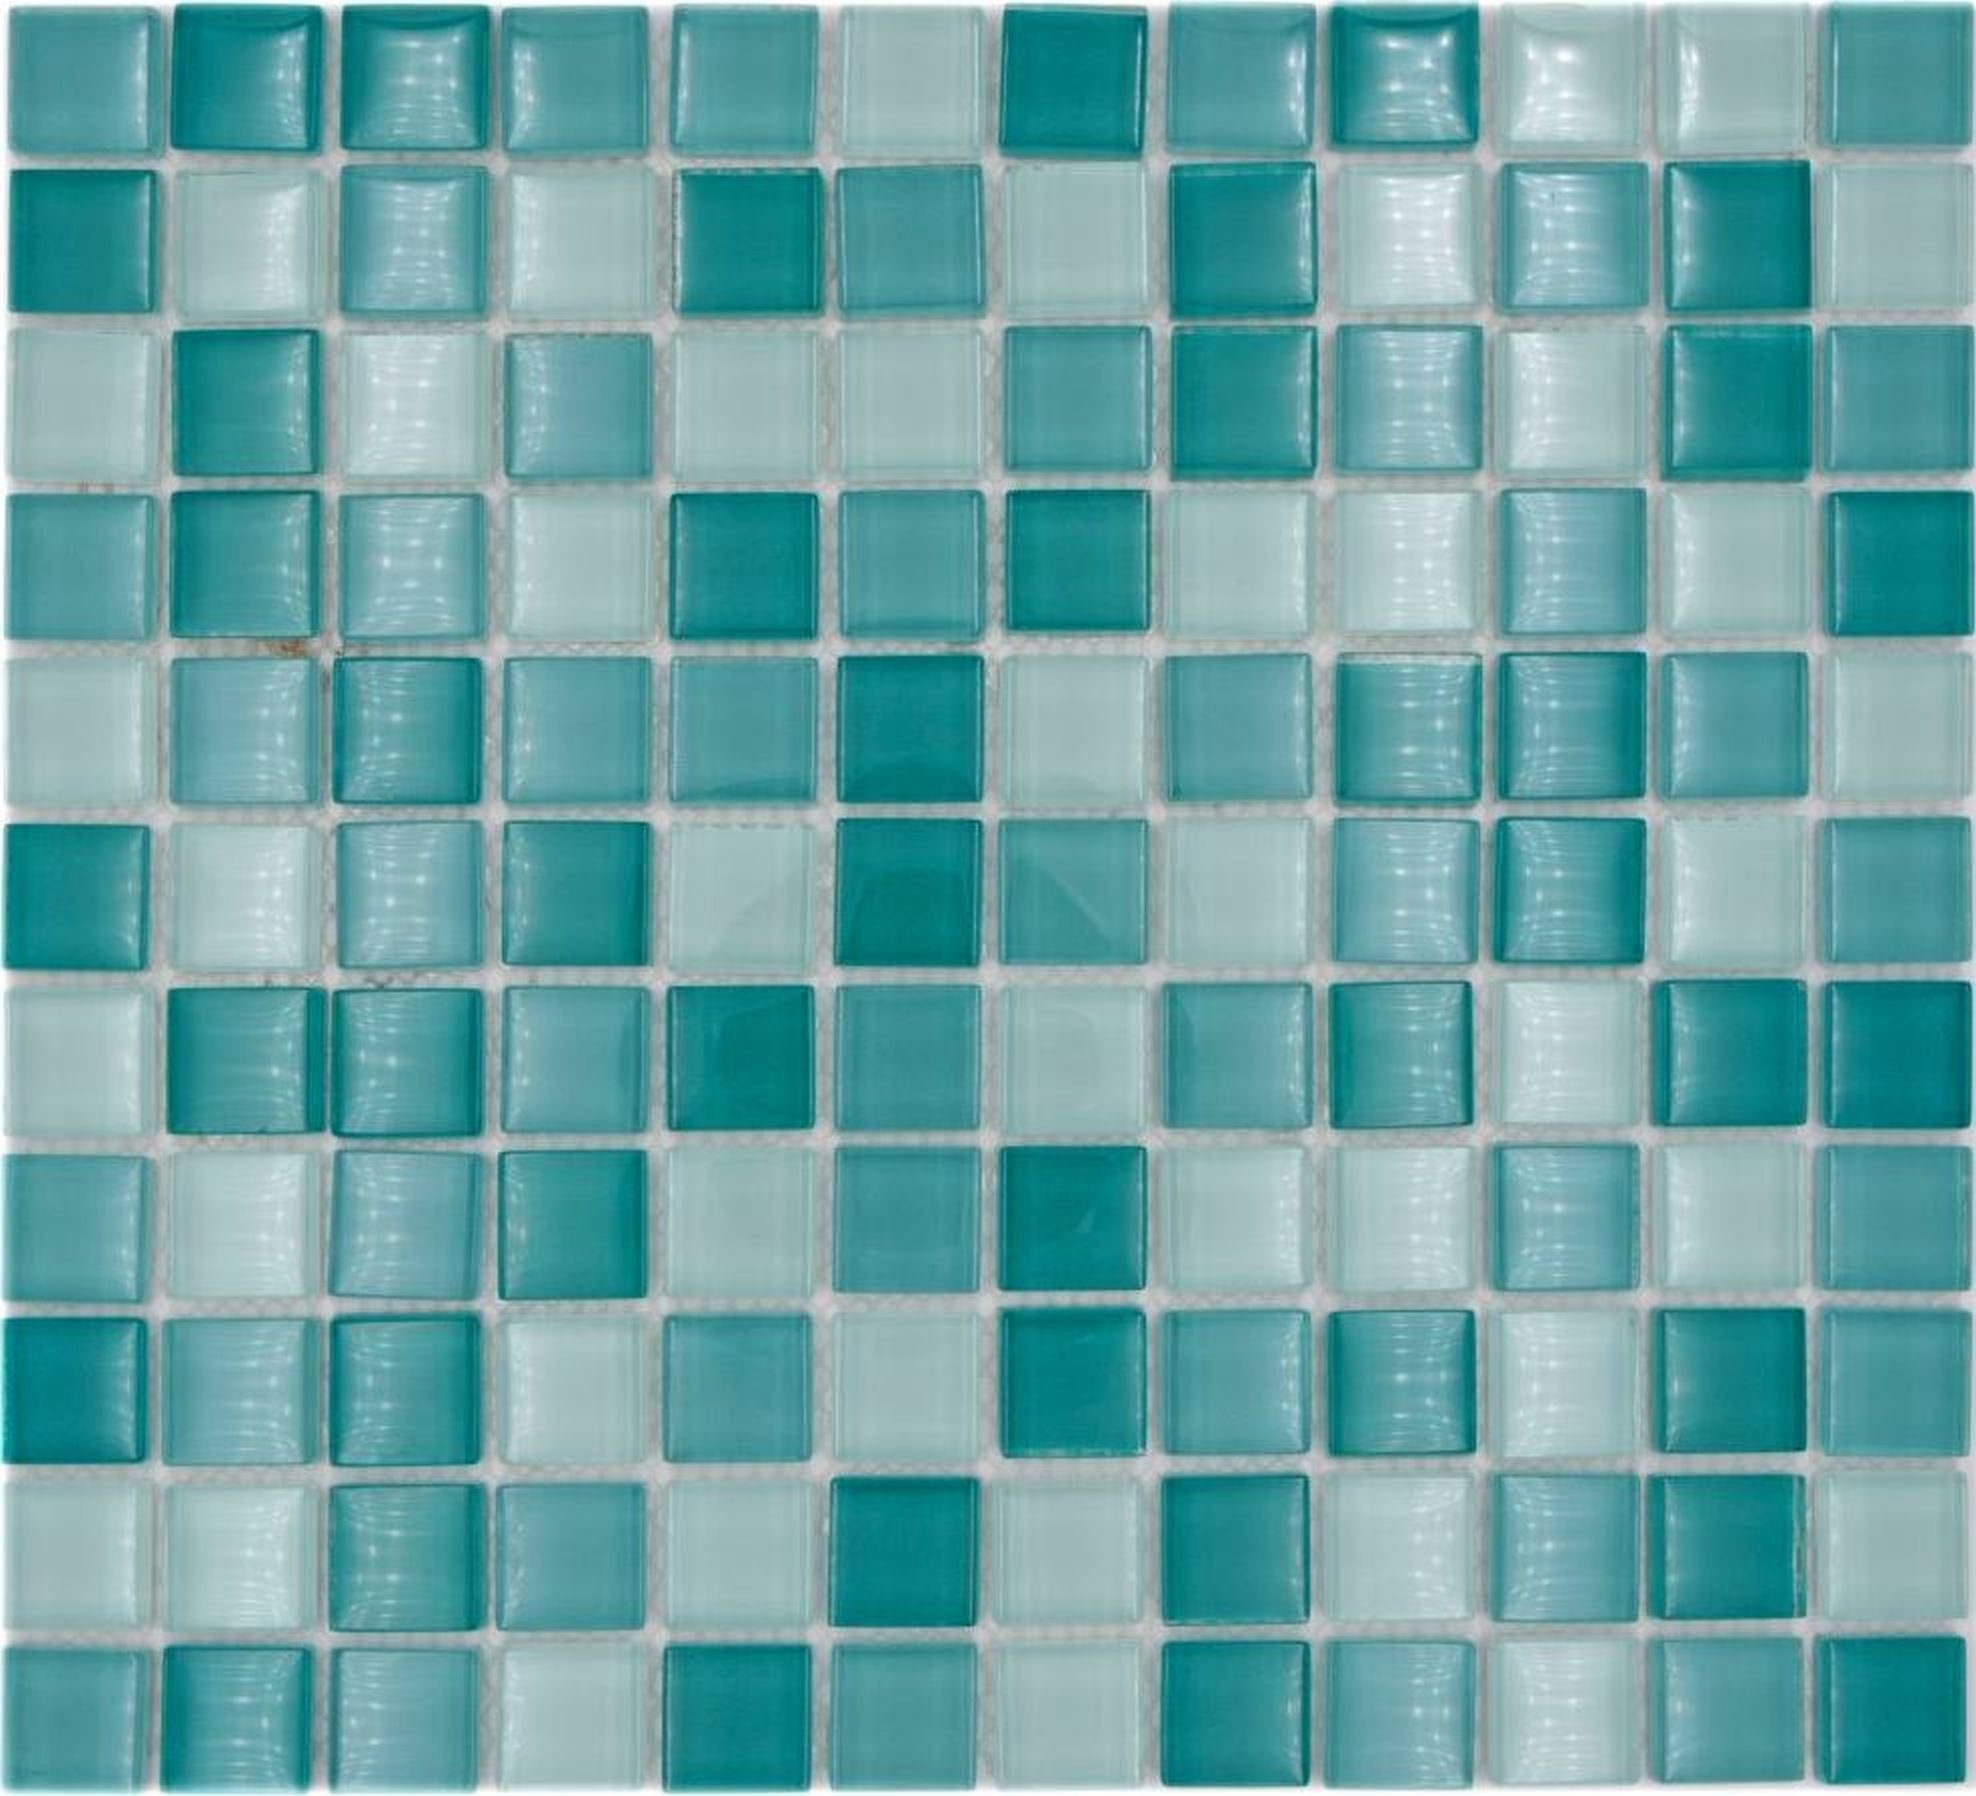 Mosani Mosaikfliesen Küche grün türkis Mosaikfliesen WC BAD Glasmosaik WAND